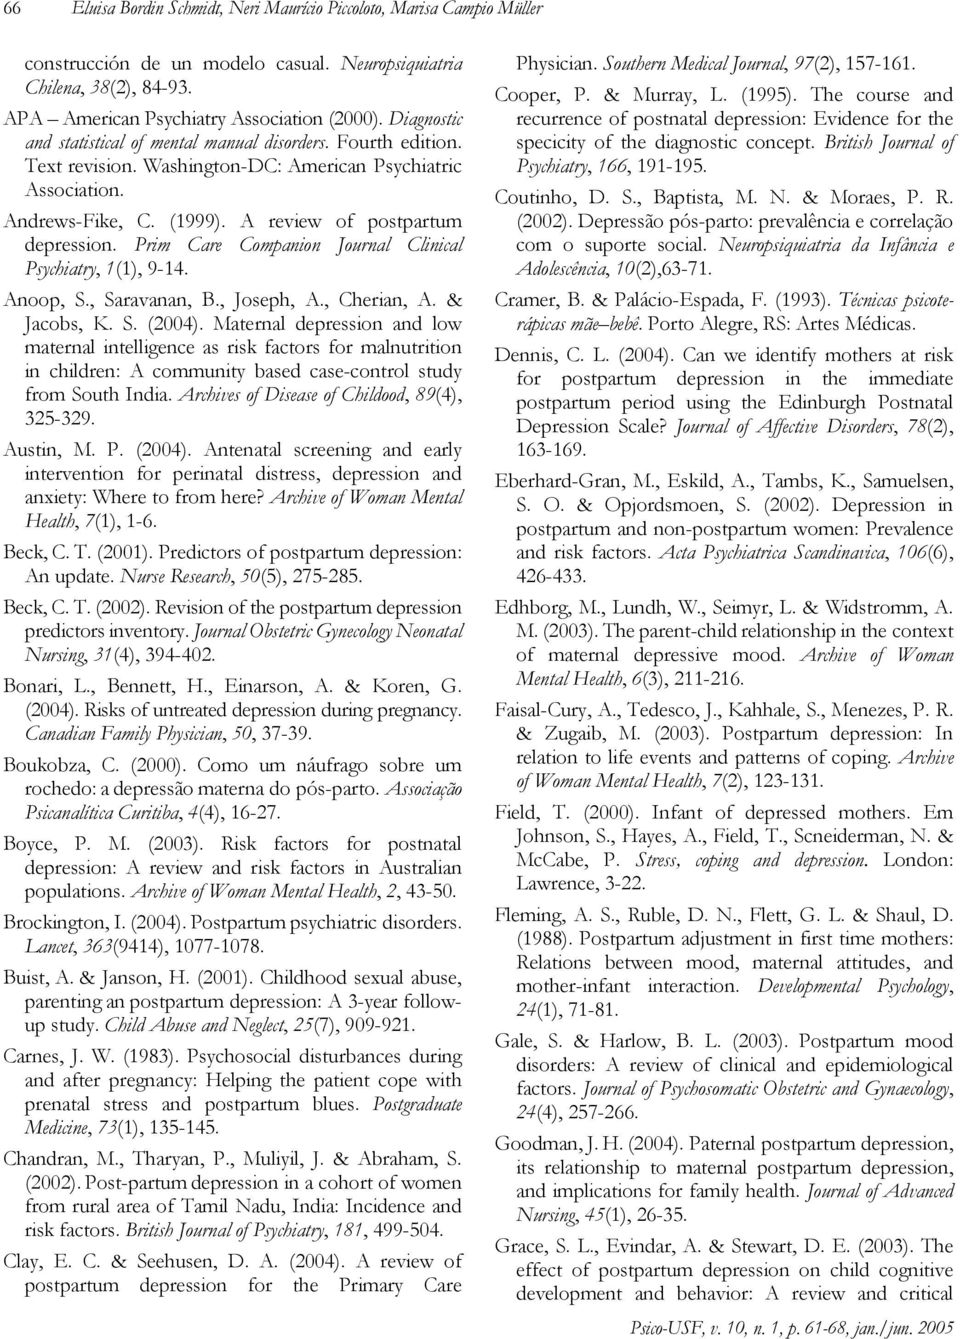 Prim Care Companion Journal Clinical Psychiatry, 1(1), 9-14. Anoop, S., Saravanan, B., Joseph, A., Cherian, A. & Jacobs, K. S. (2004).